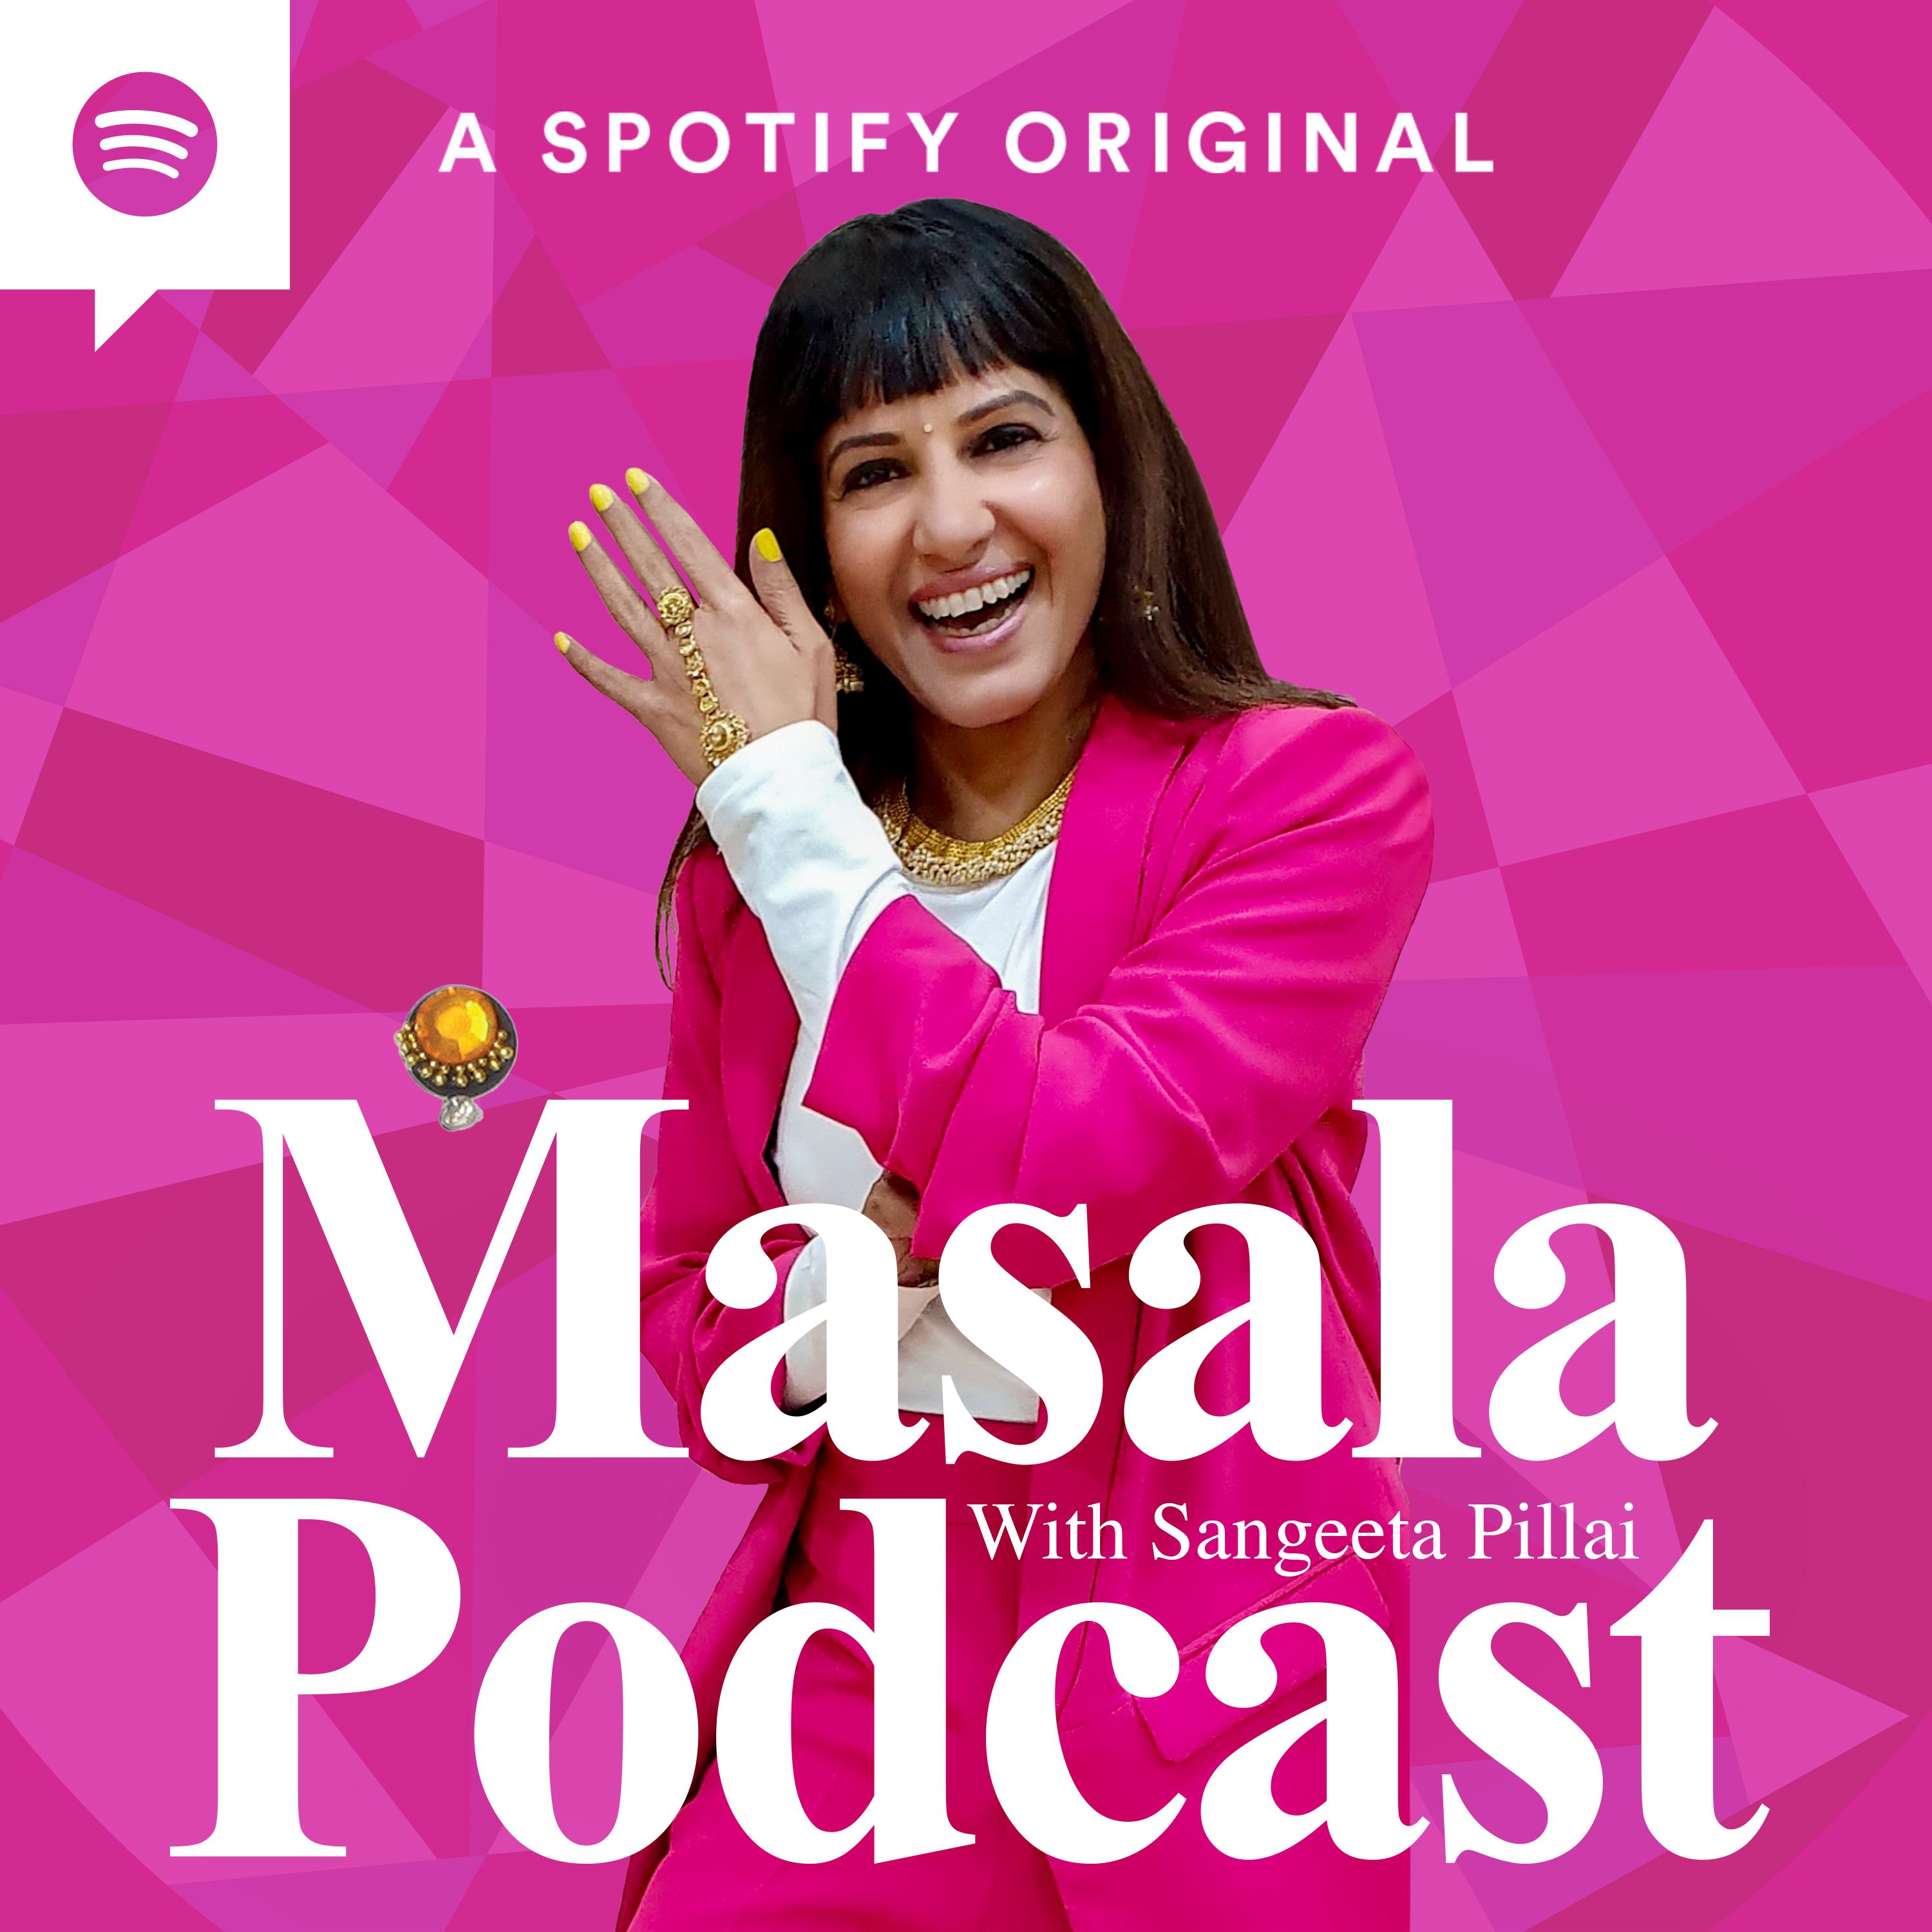 Manjeet Kaur Sexx - Masala Podcast: The South Asian feminist podcast